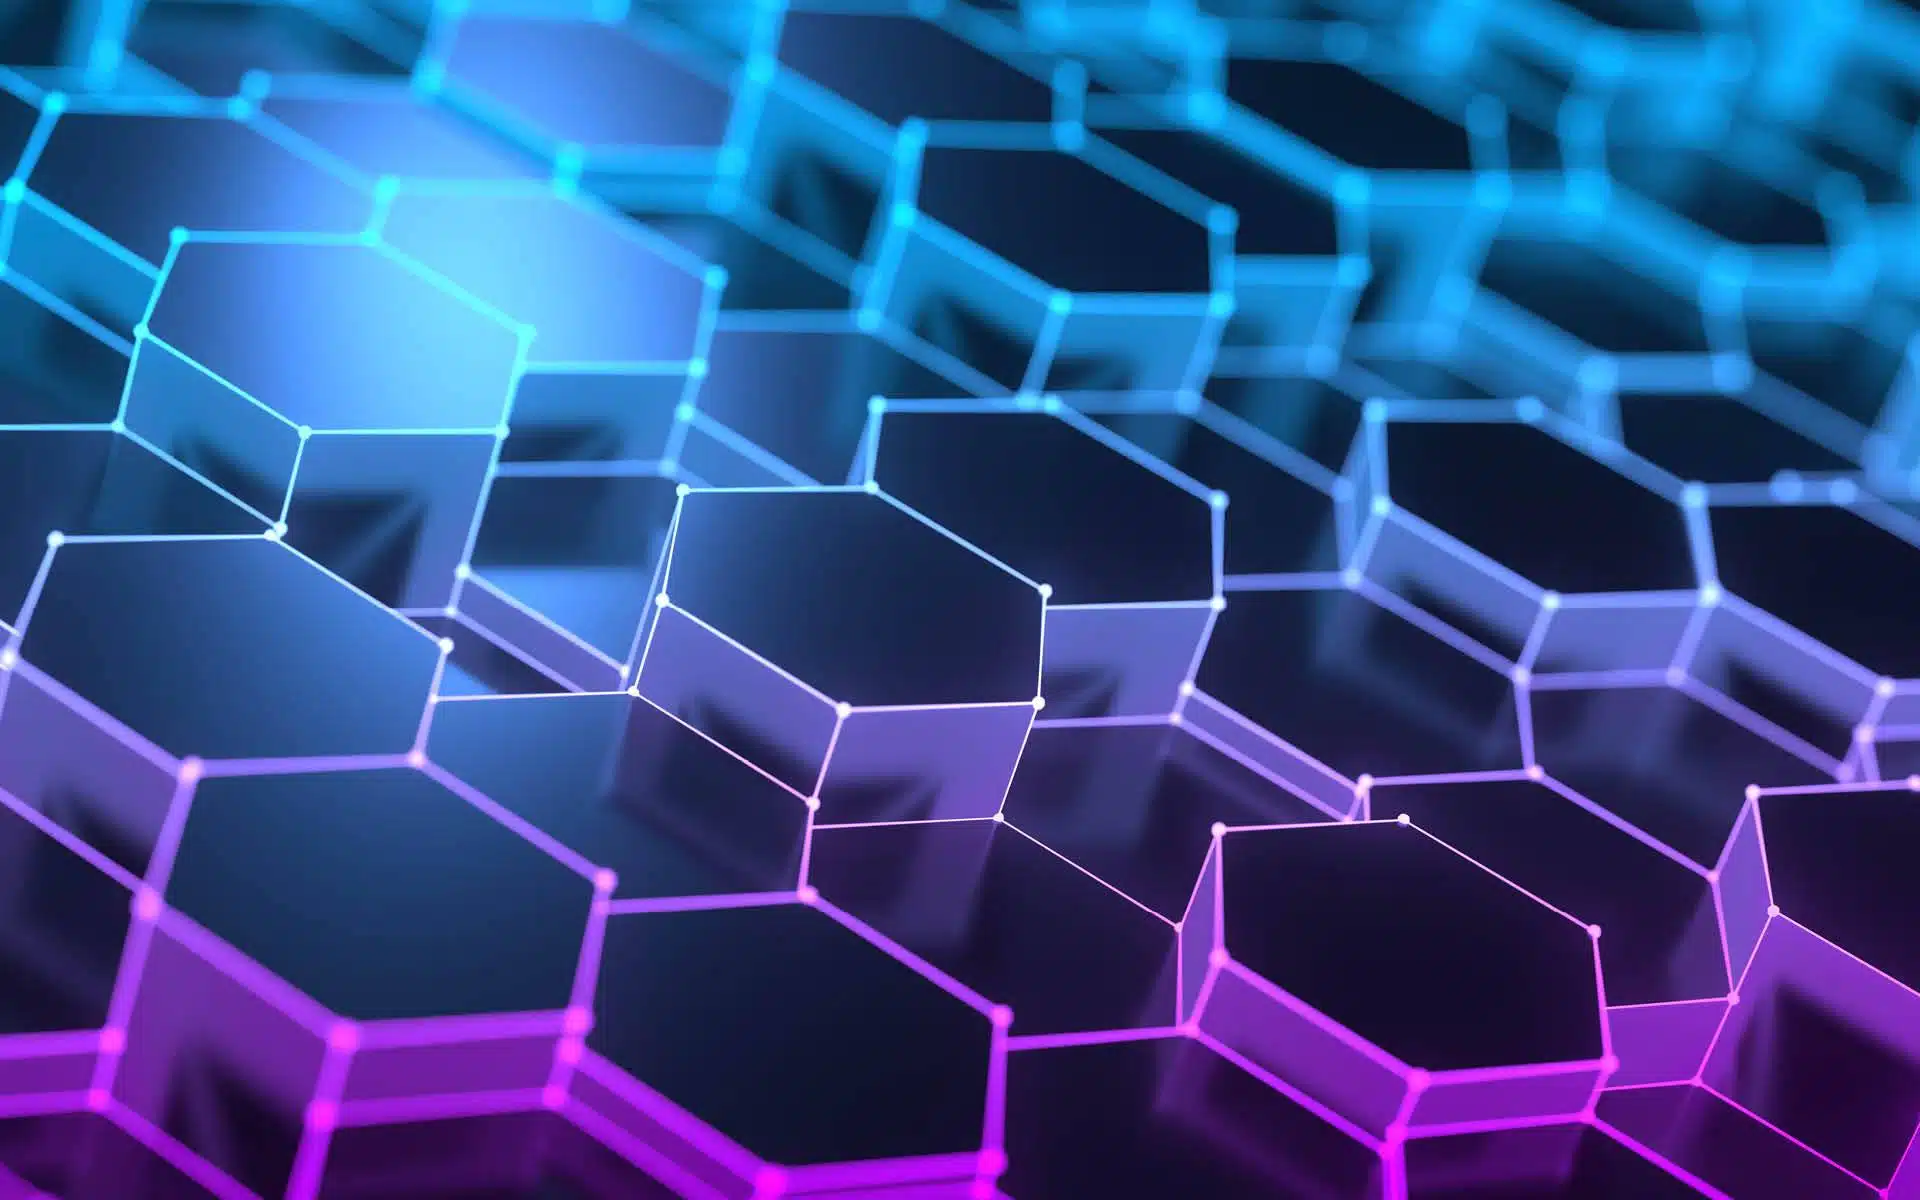 Blue and purple digital hexagon pattern